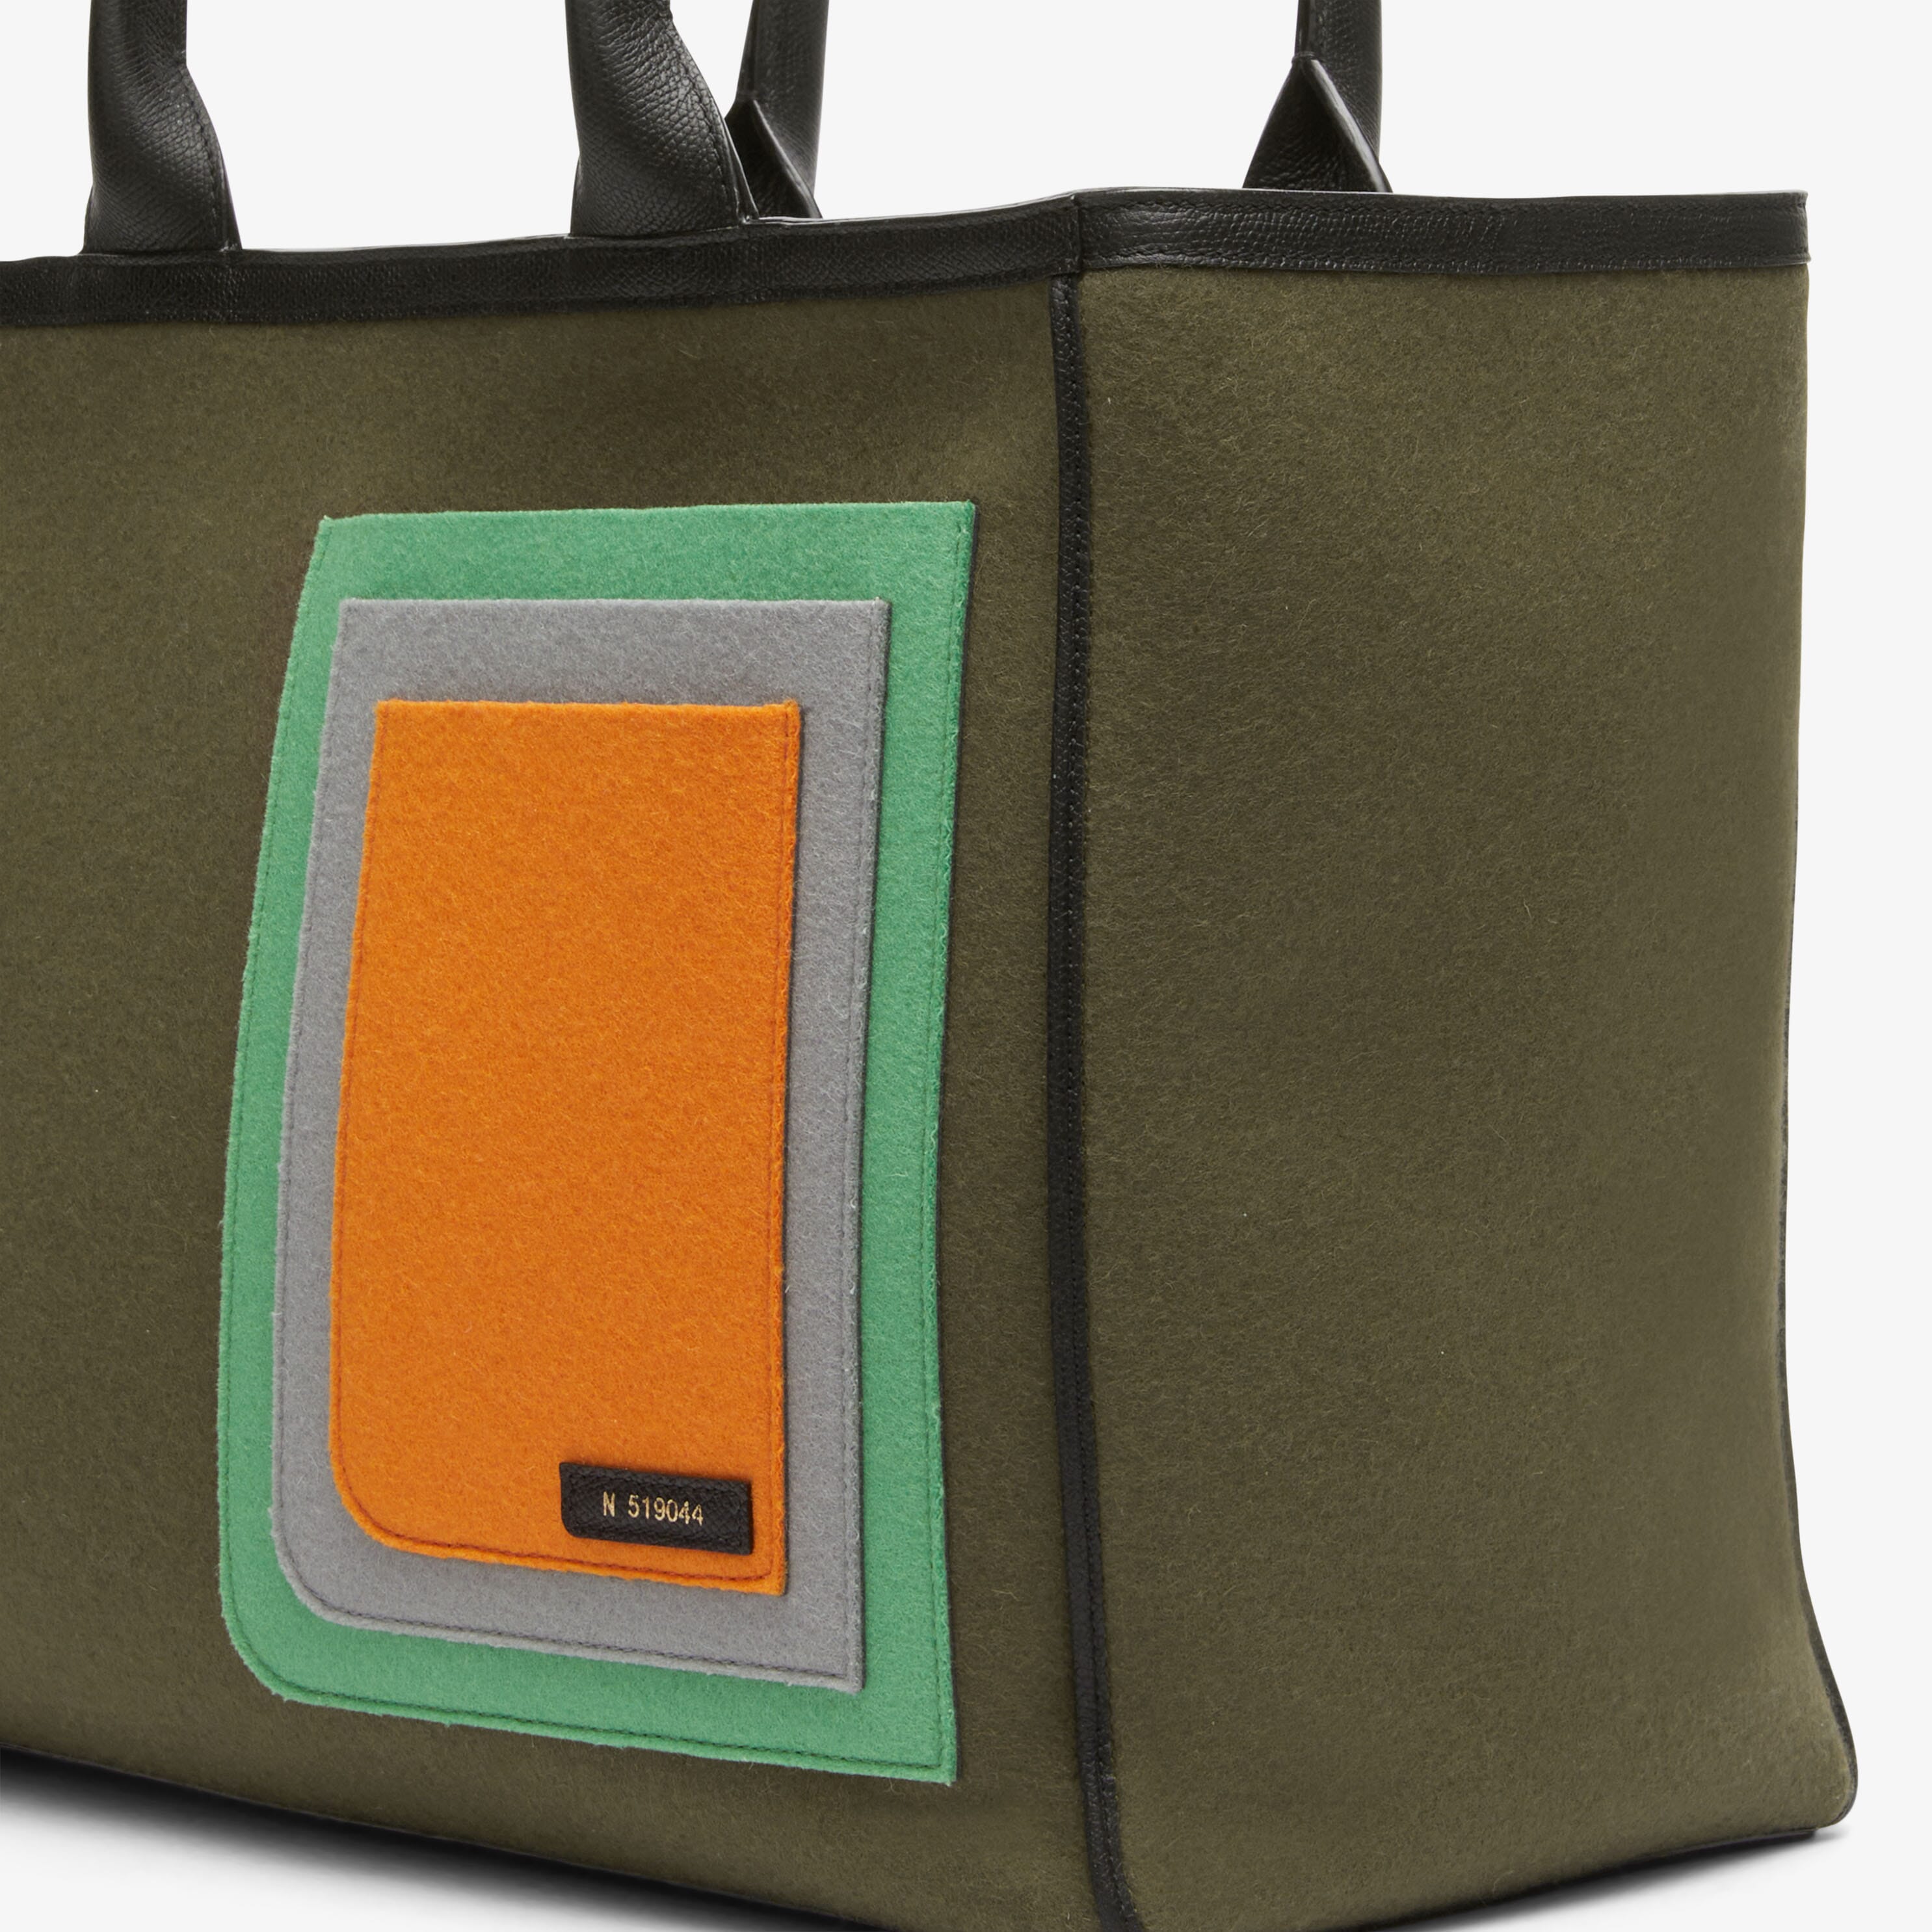 Soft Tote Felt Large Bag - Military Green/Grass Green/Ash Grey/Orange/Black - Feltro/Vitello VS - Valextra - 3